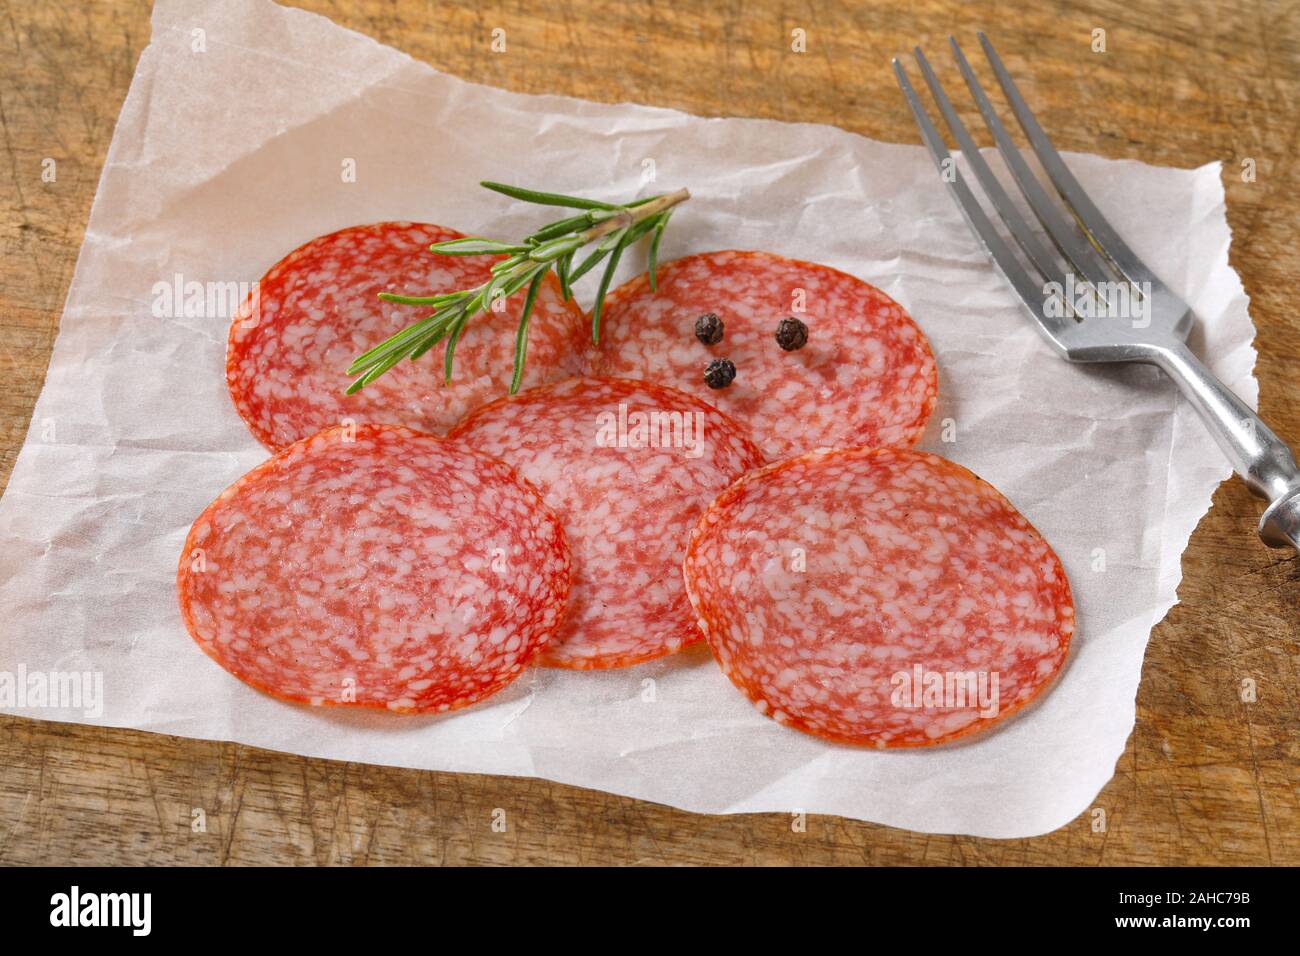 Sliced salami sausage on white wax paper Stock Photo